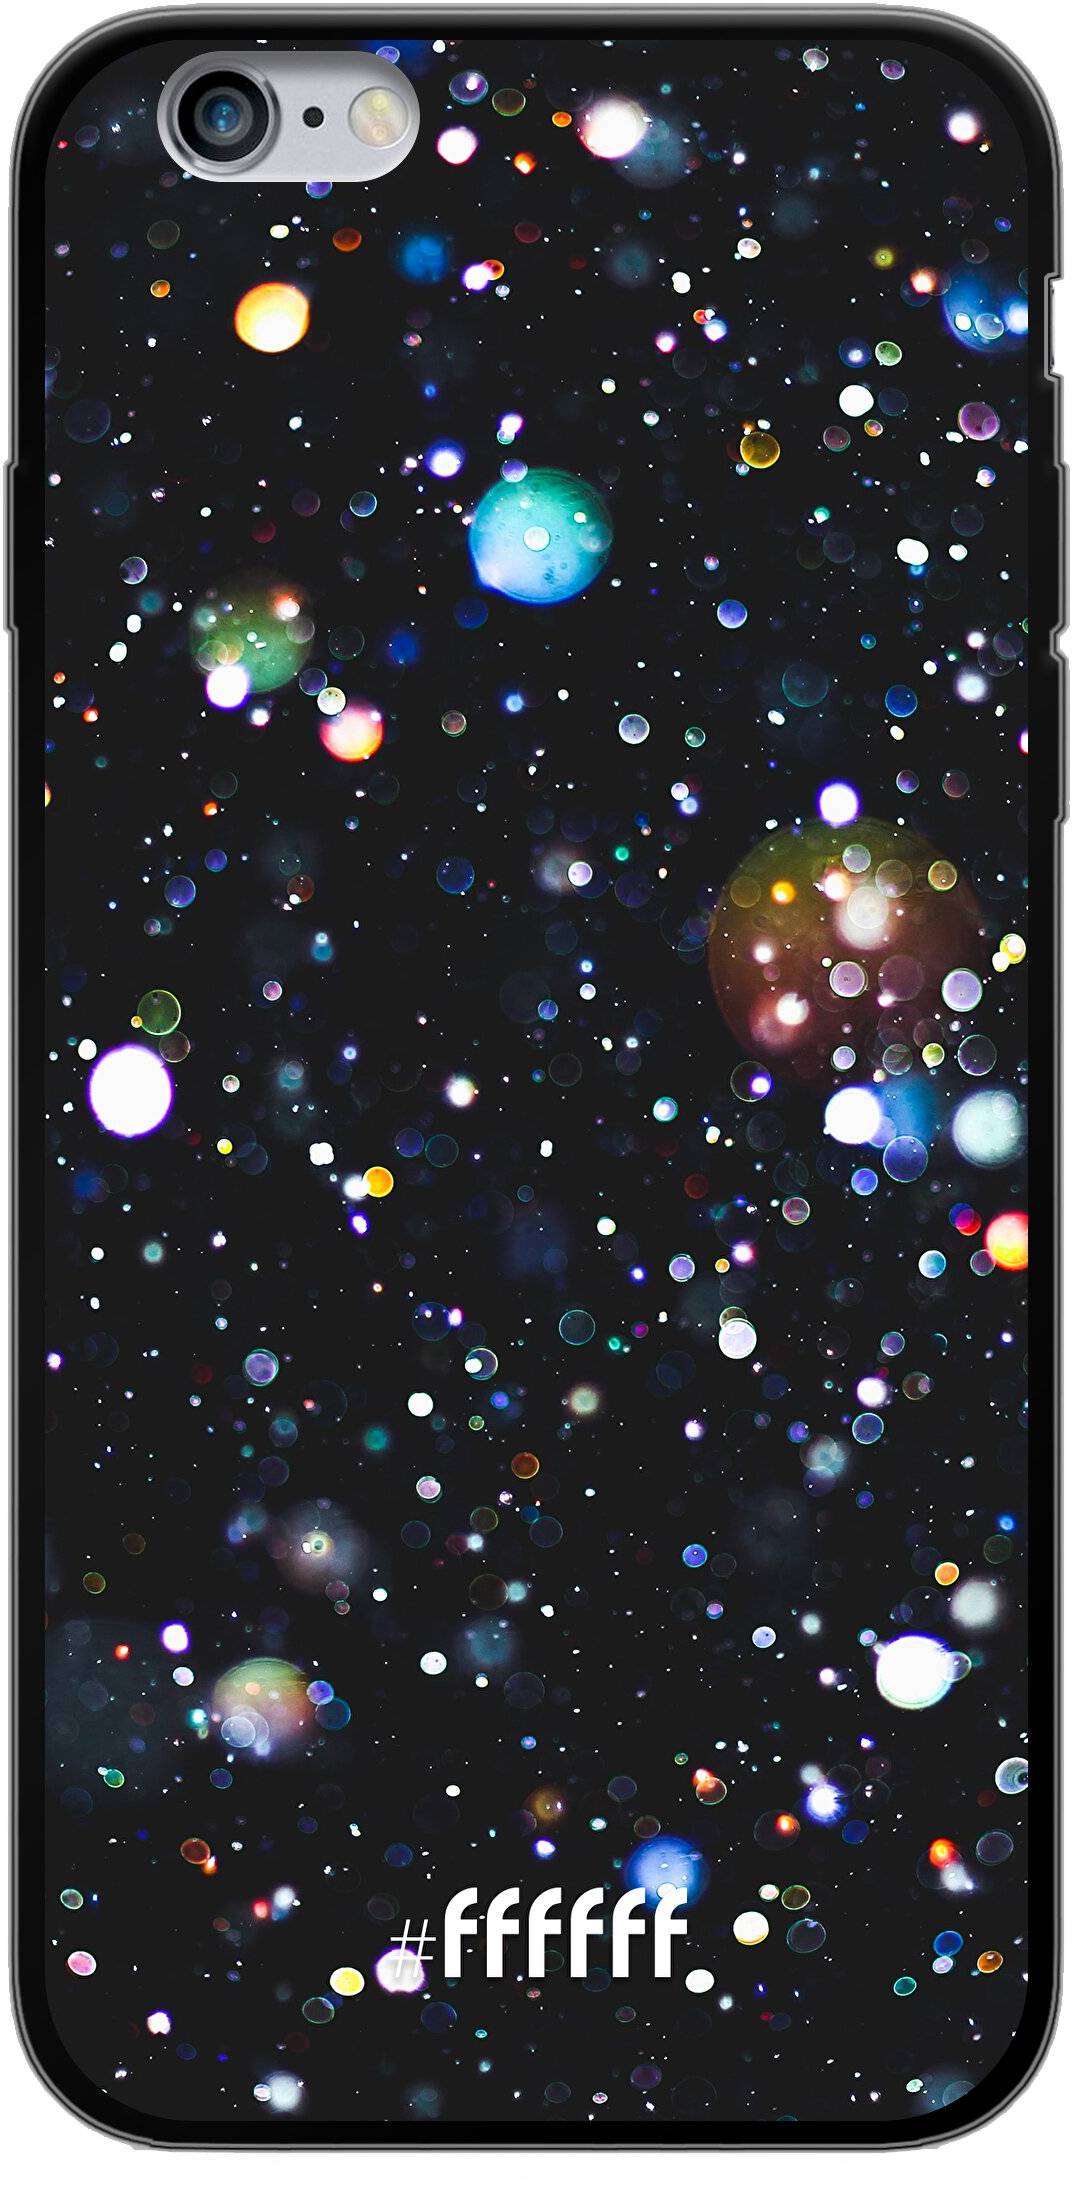 Galactic Bokeh iPhone 6s